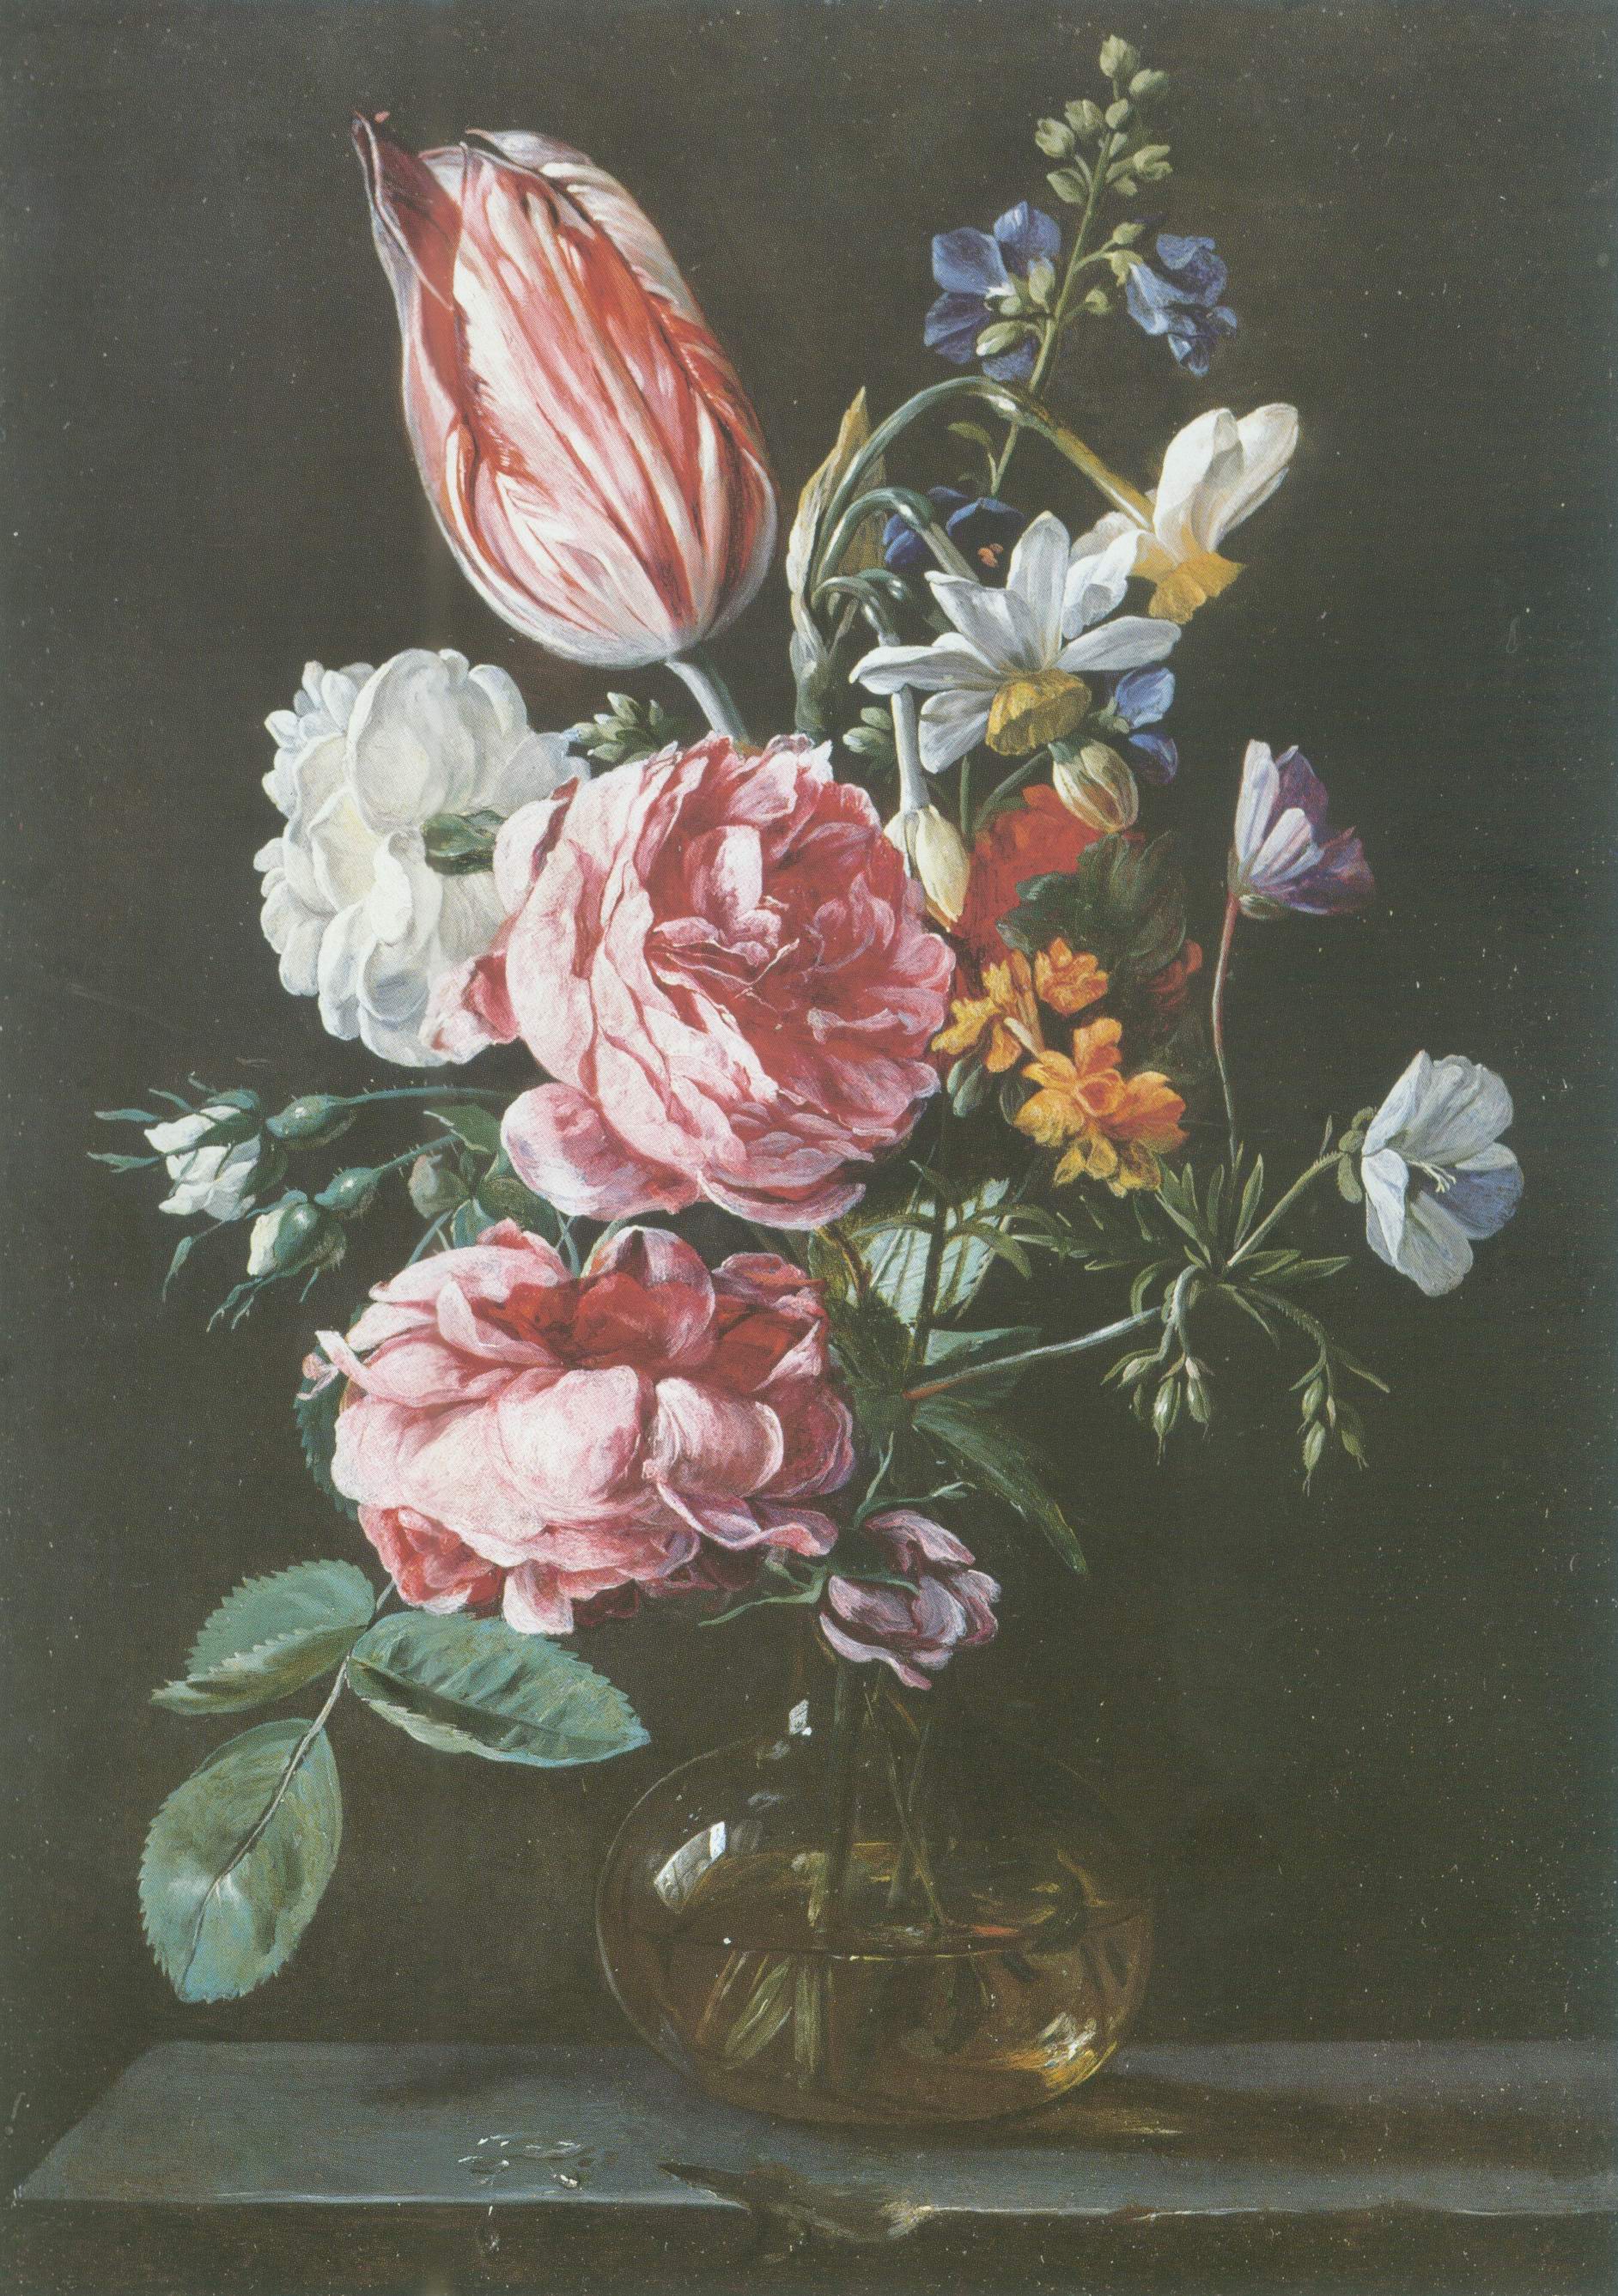 rose , parrot tulip narcissi glass vas on stone l painting, a Jan van den hecke paintings